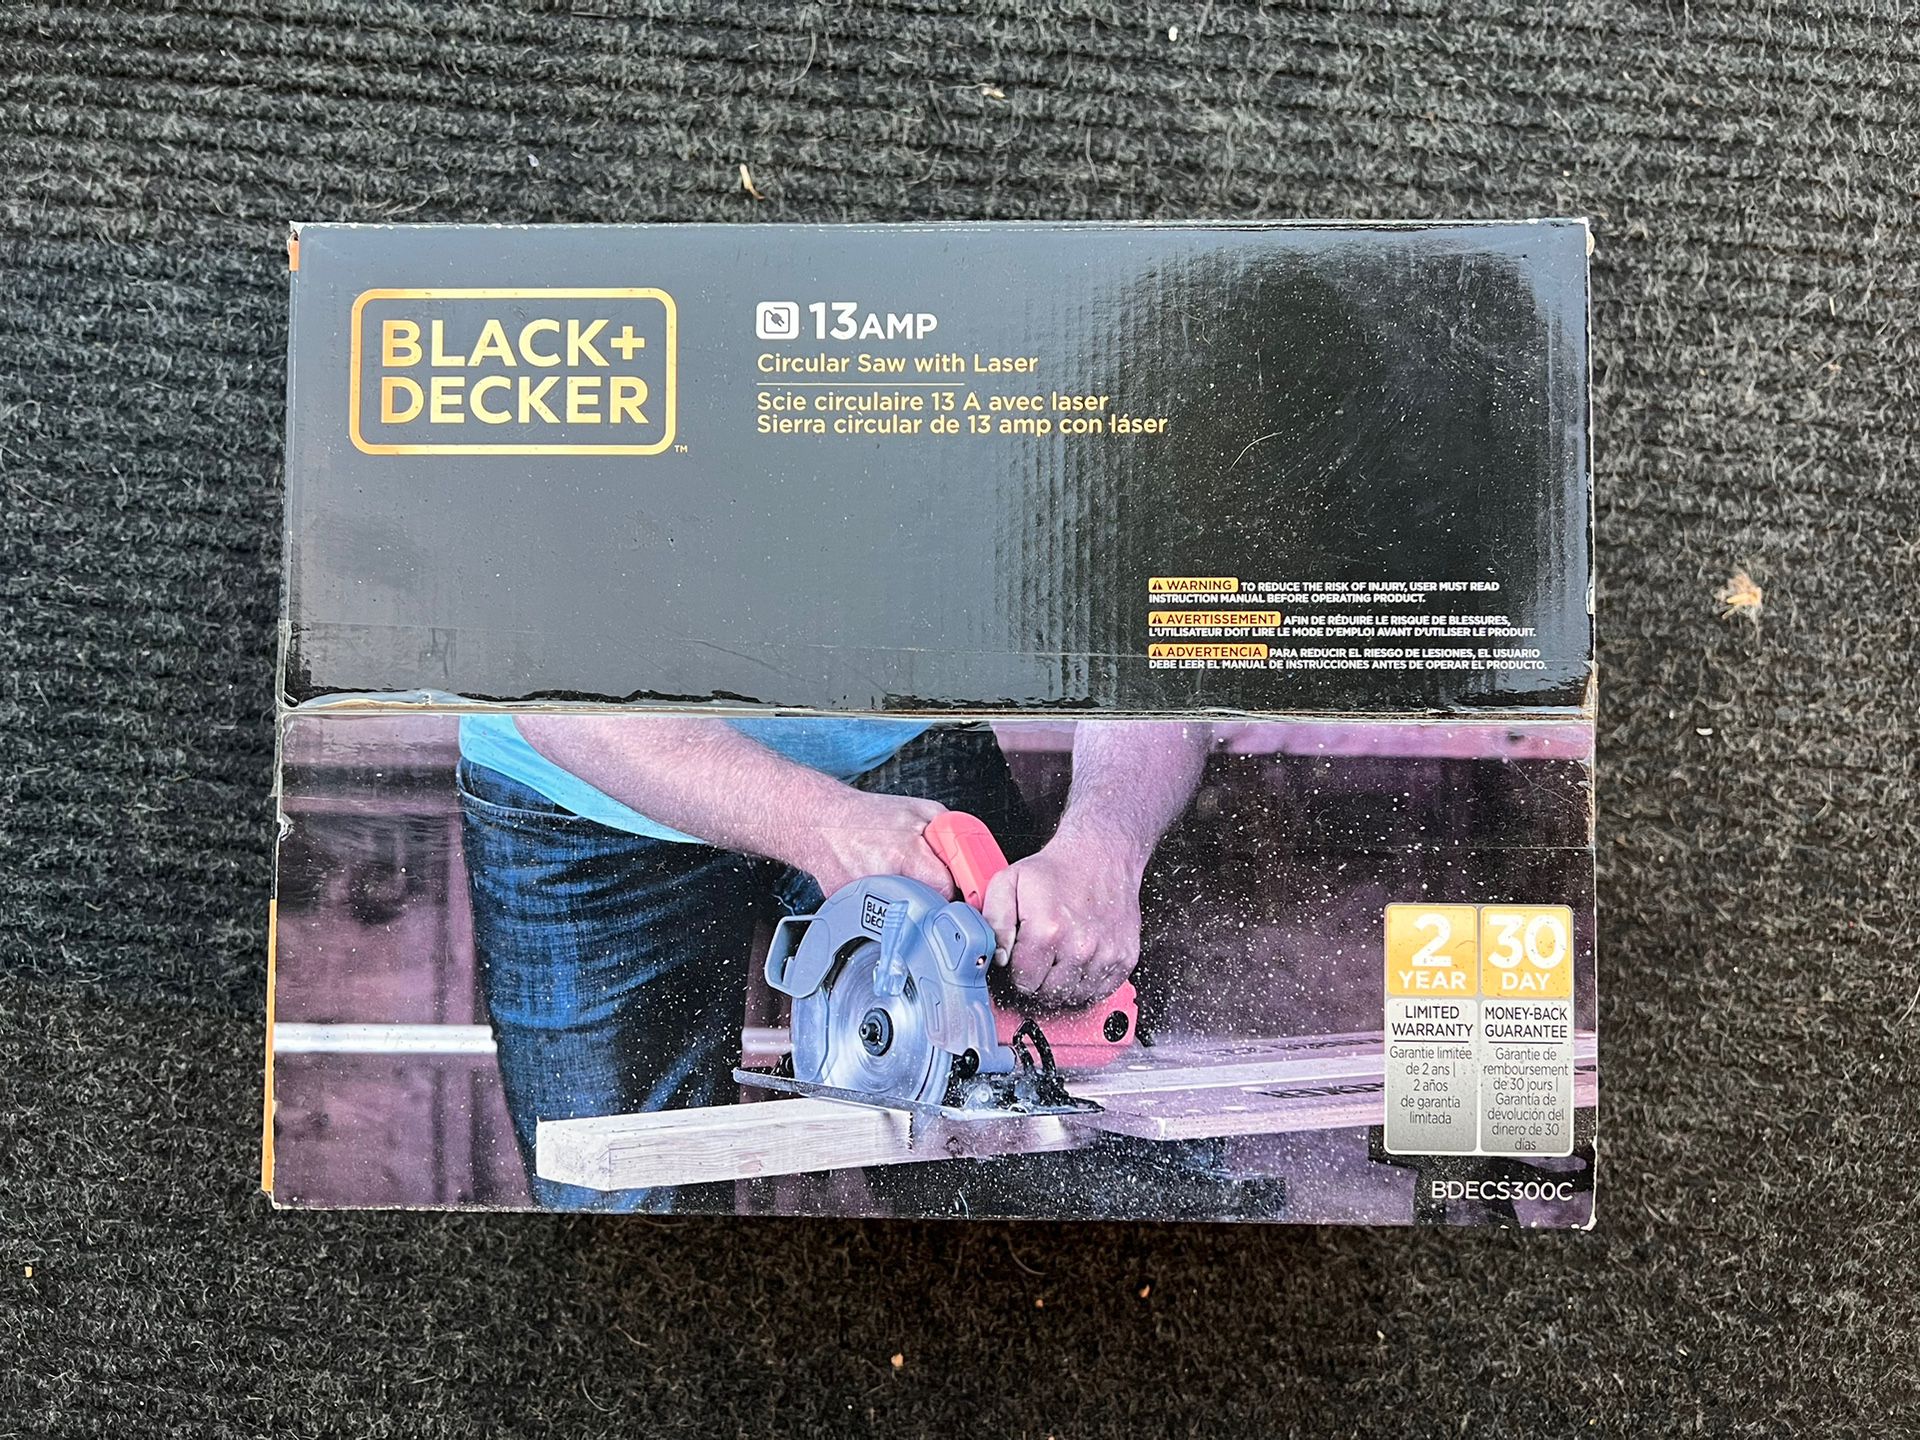 Black & Decker BDECS300C 13 Amp Circular Saw with Laser